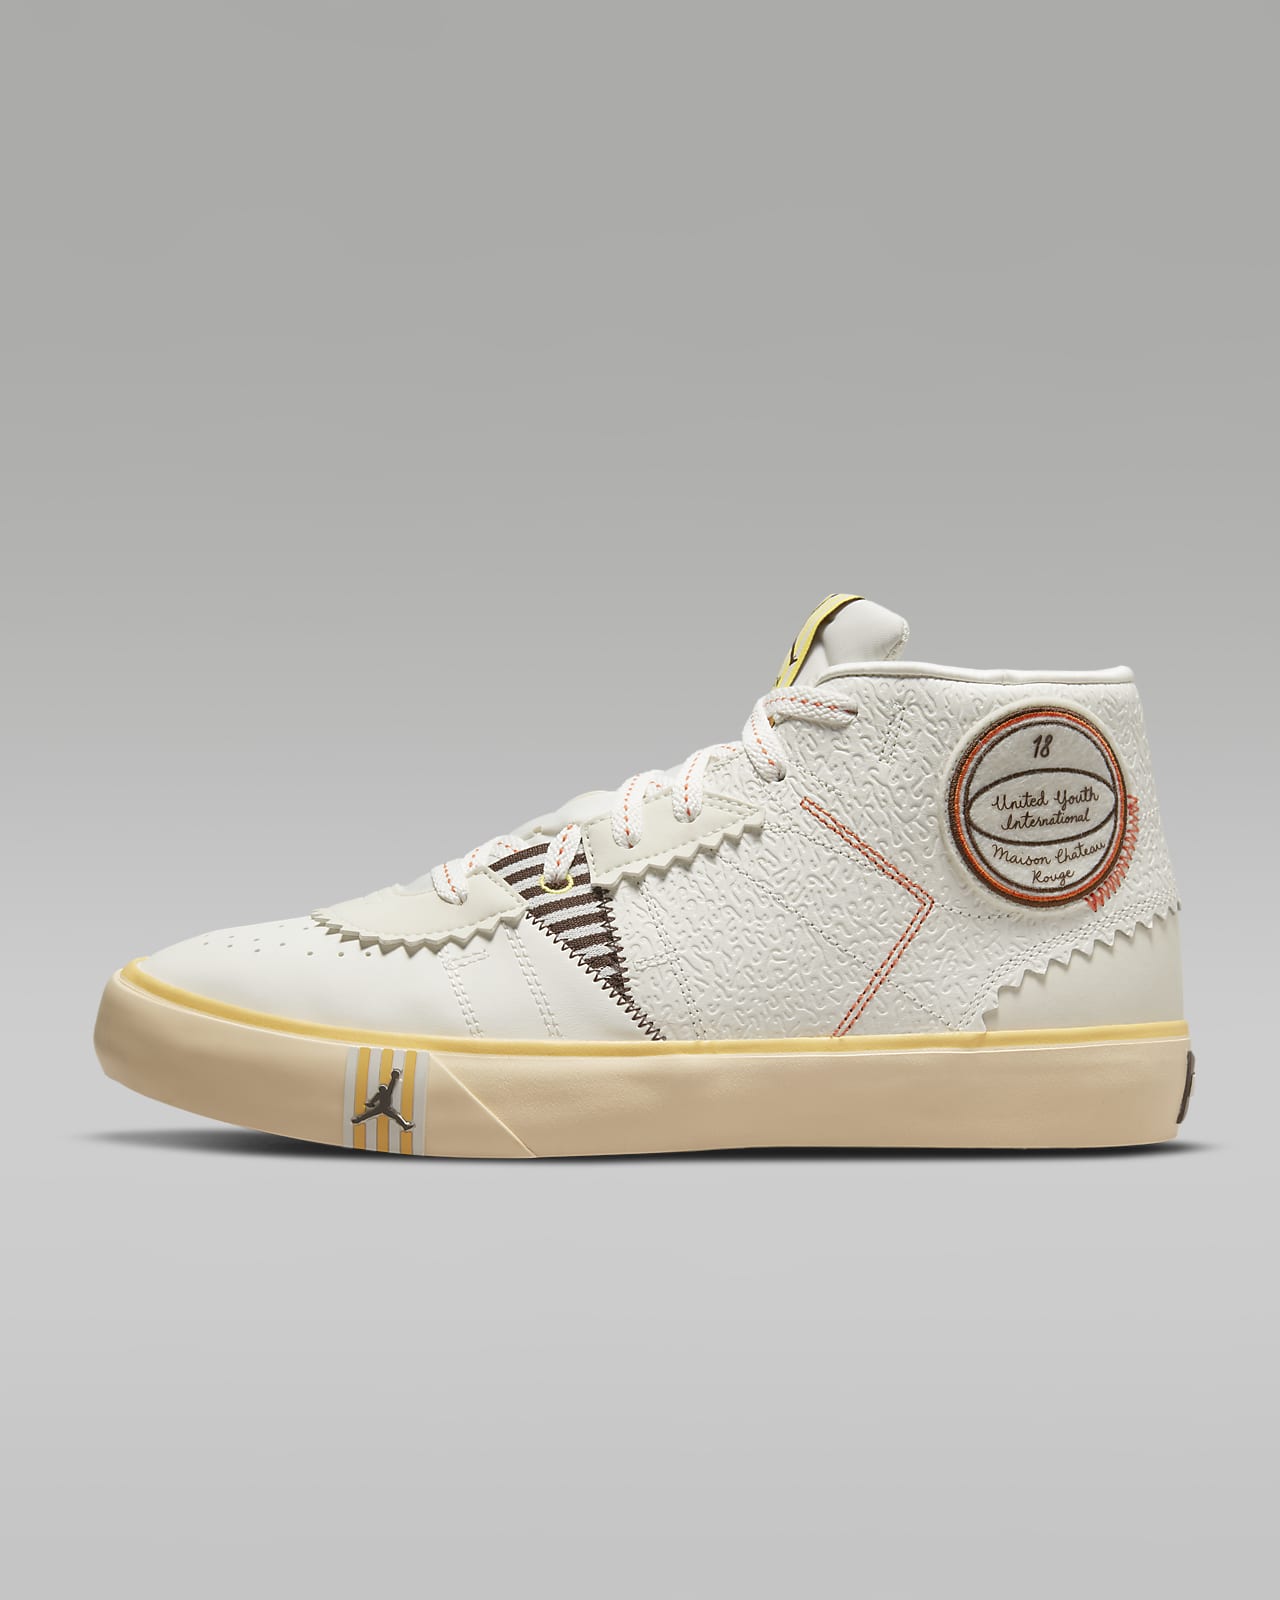 Sneaker News on X: The Air Jordan IV meets the Louis Vuitton Dons    / X